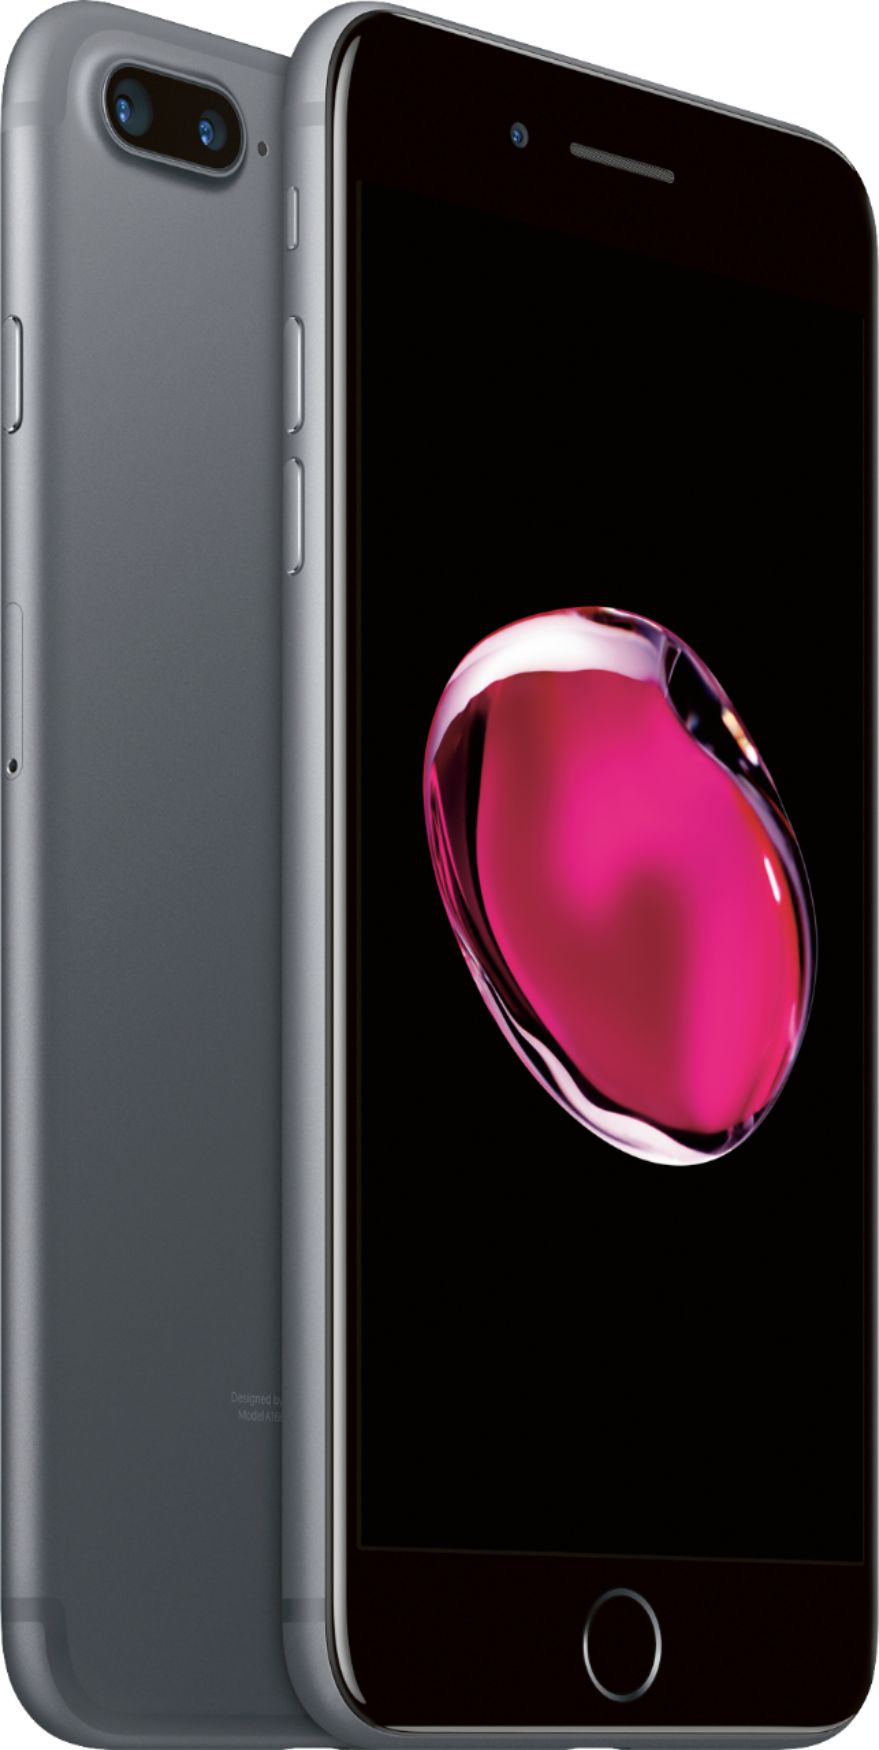 Best Buy Apple Iphone 7 Plus 32gb Black Verizon Mnqh2ll A